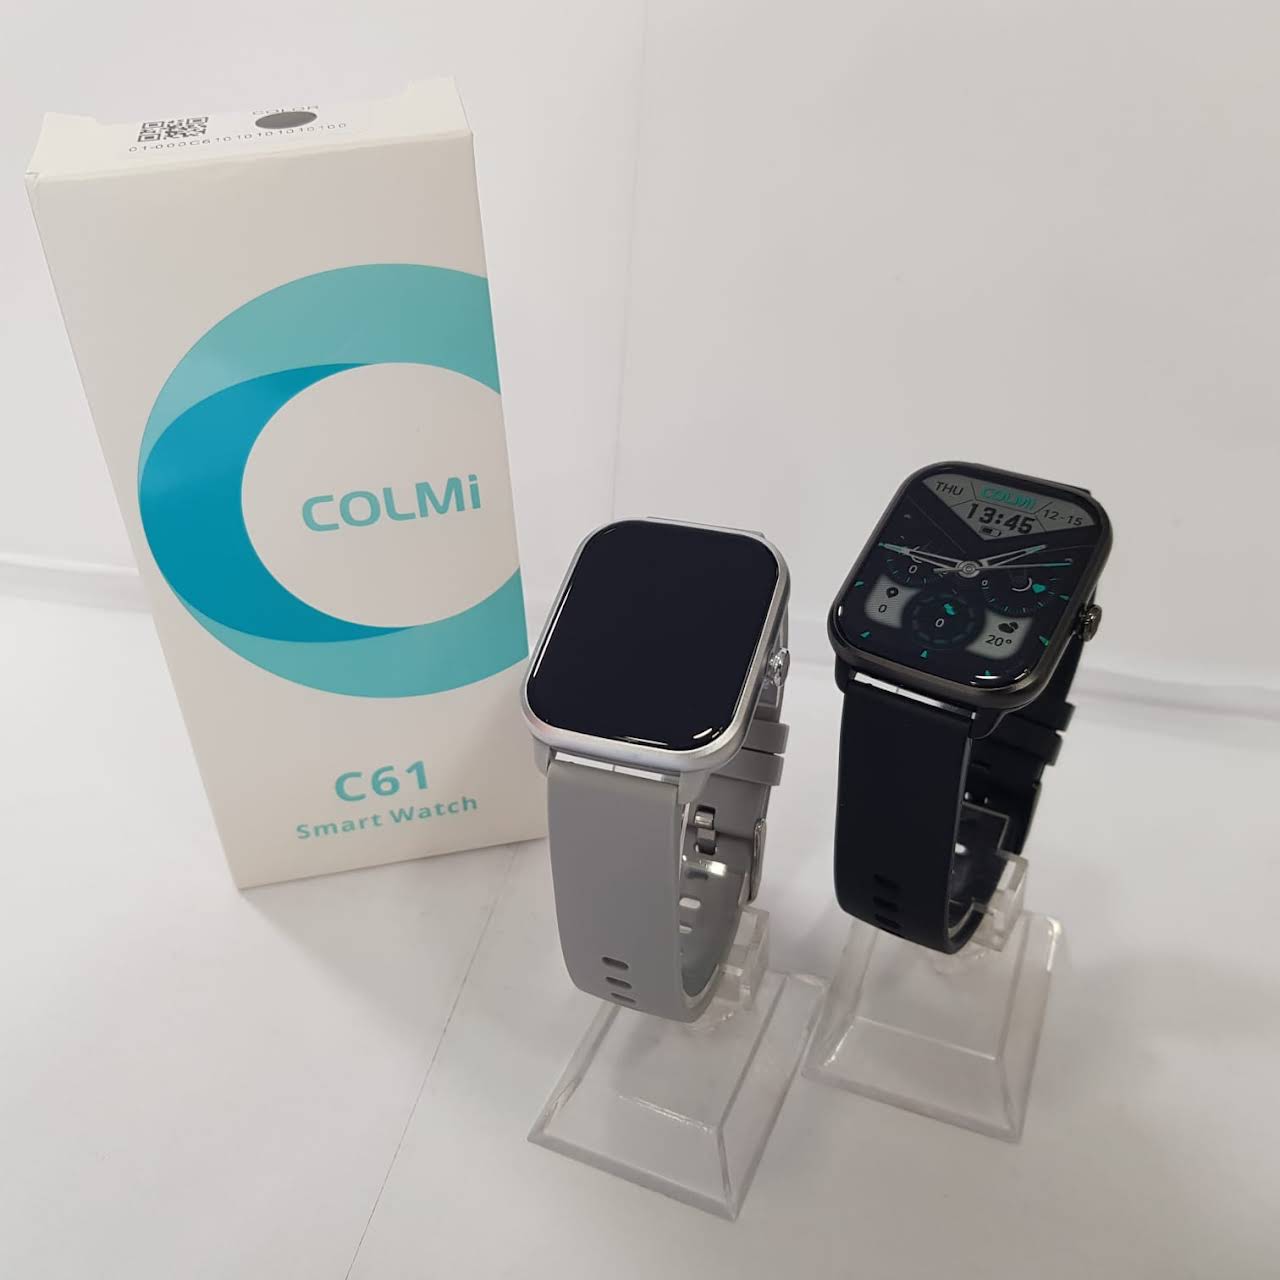 Xiaomi ColMI C61 Smartwatch